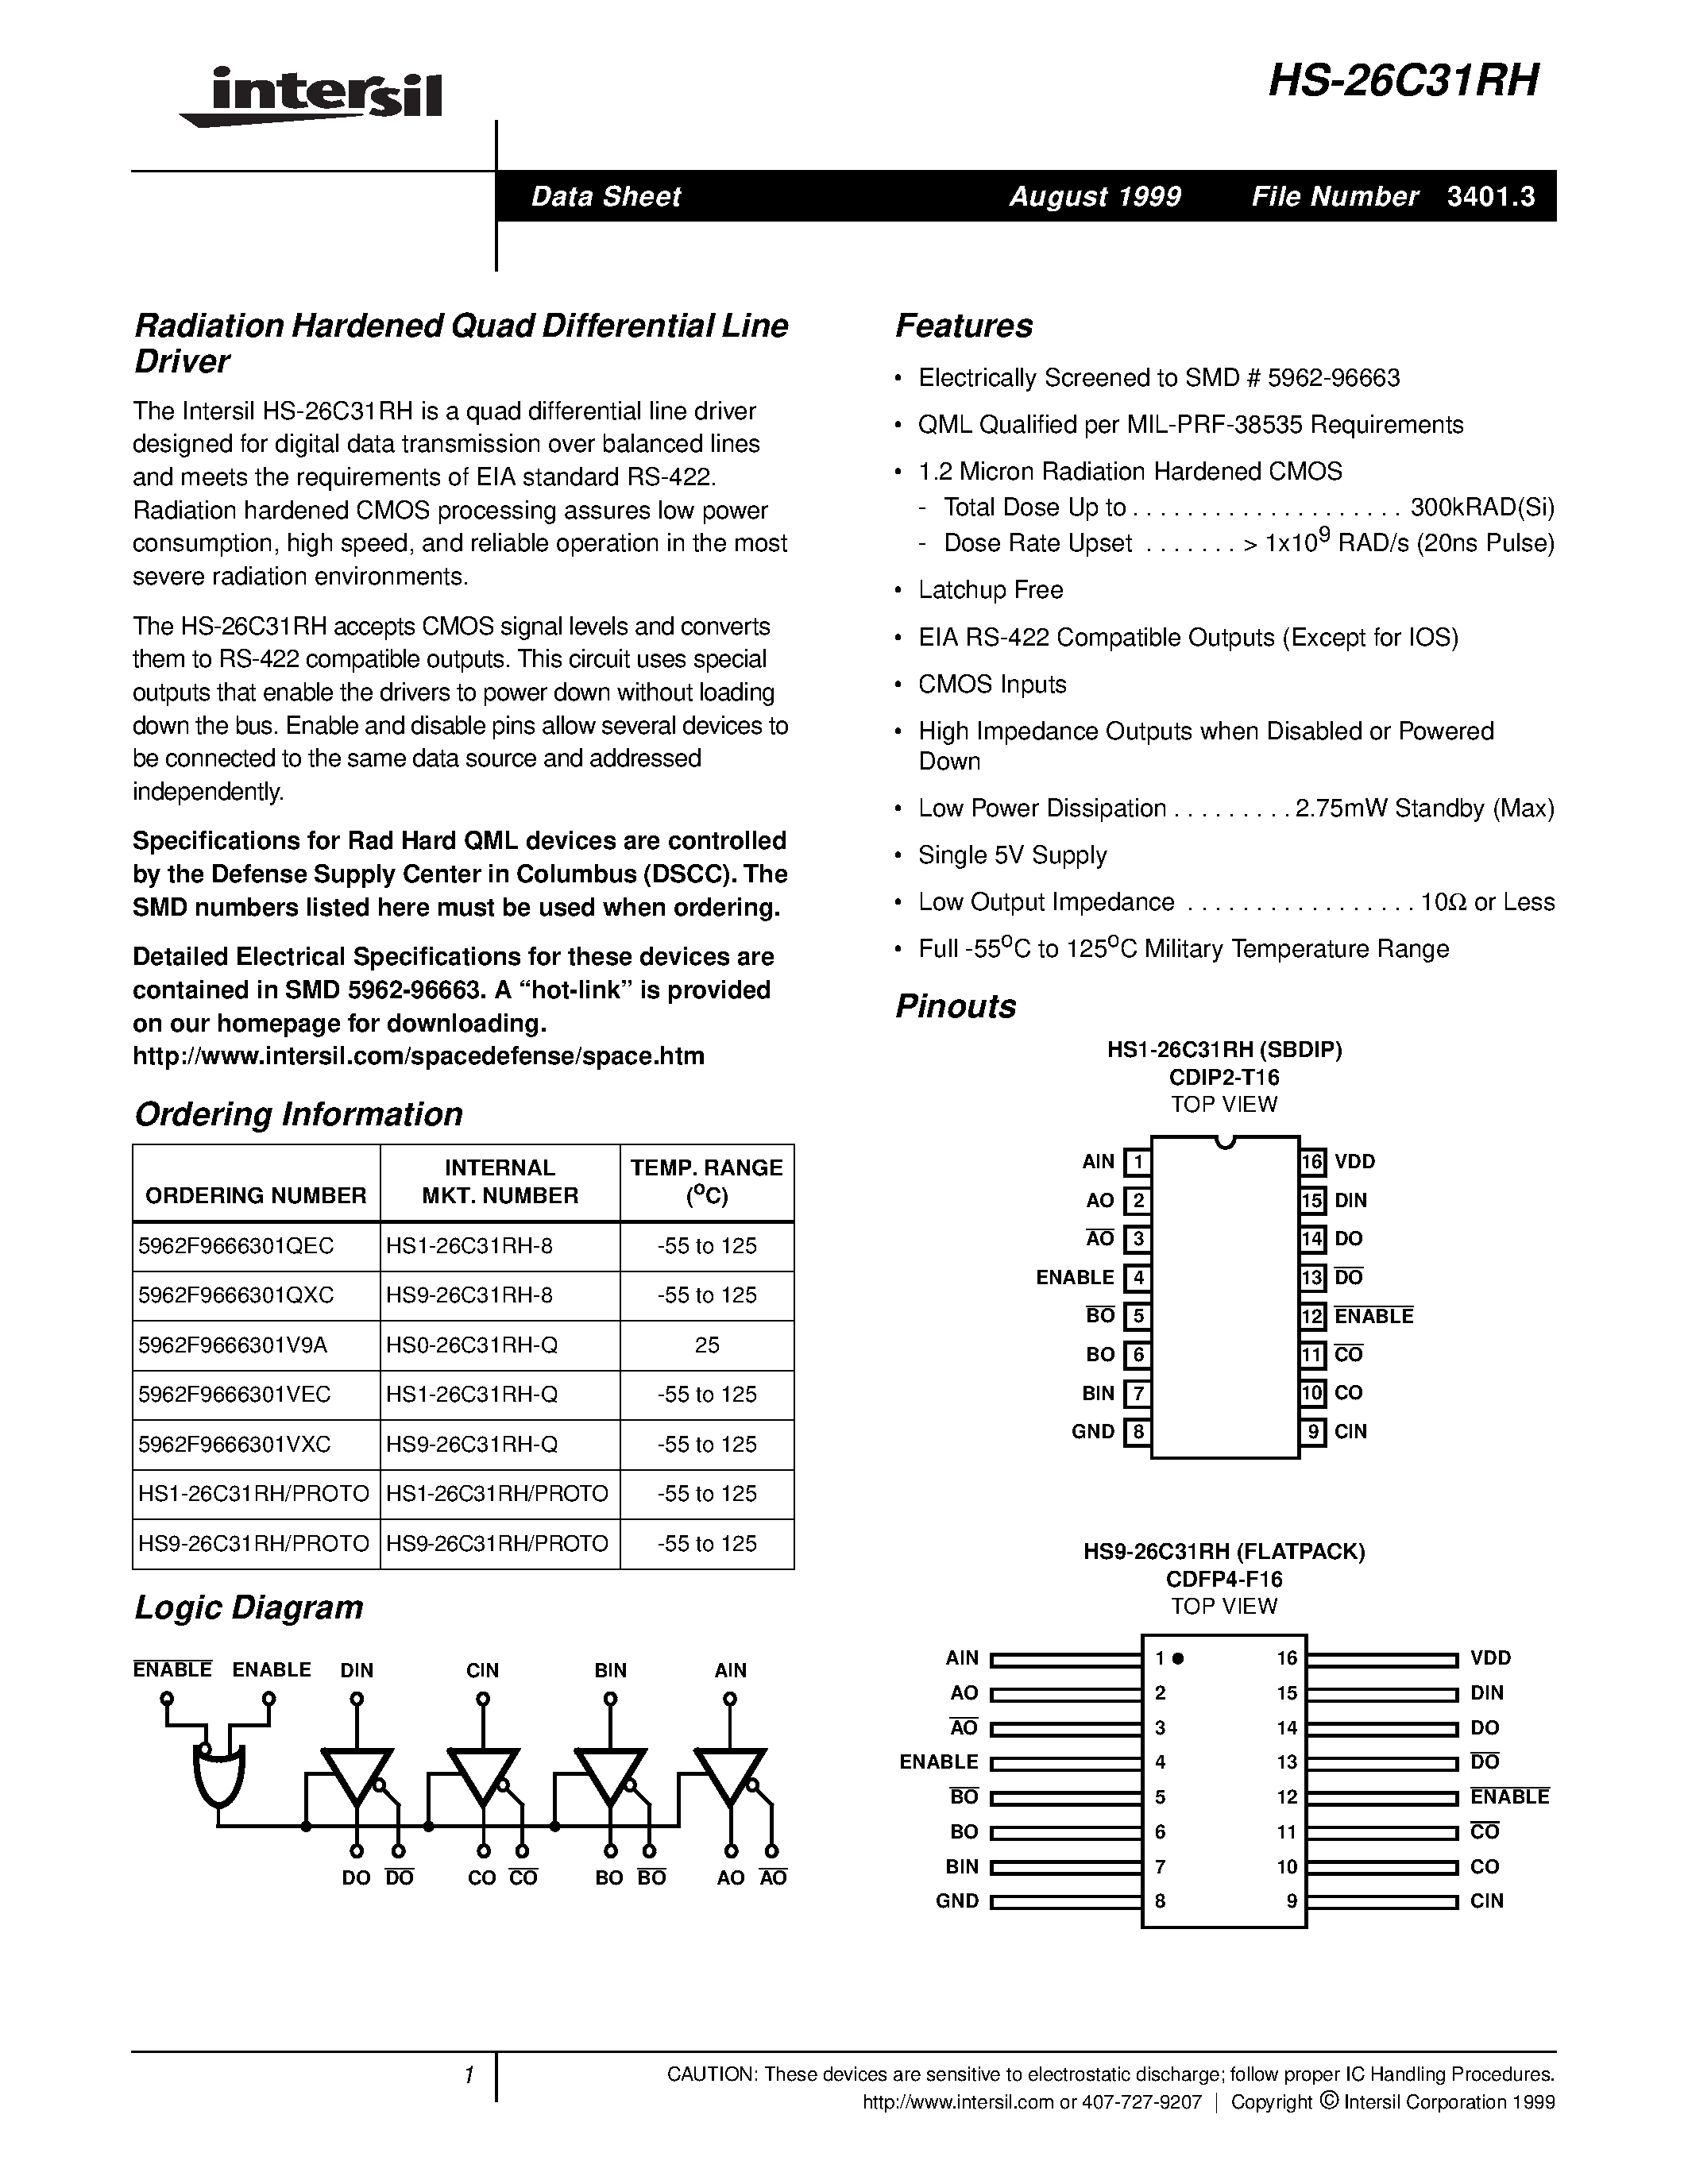 Datasheet HS9-26C31RH-Q - Radiation Hardened Quad Differential Line Driver page 1